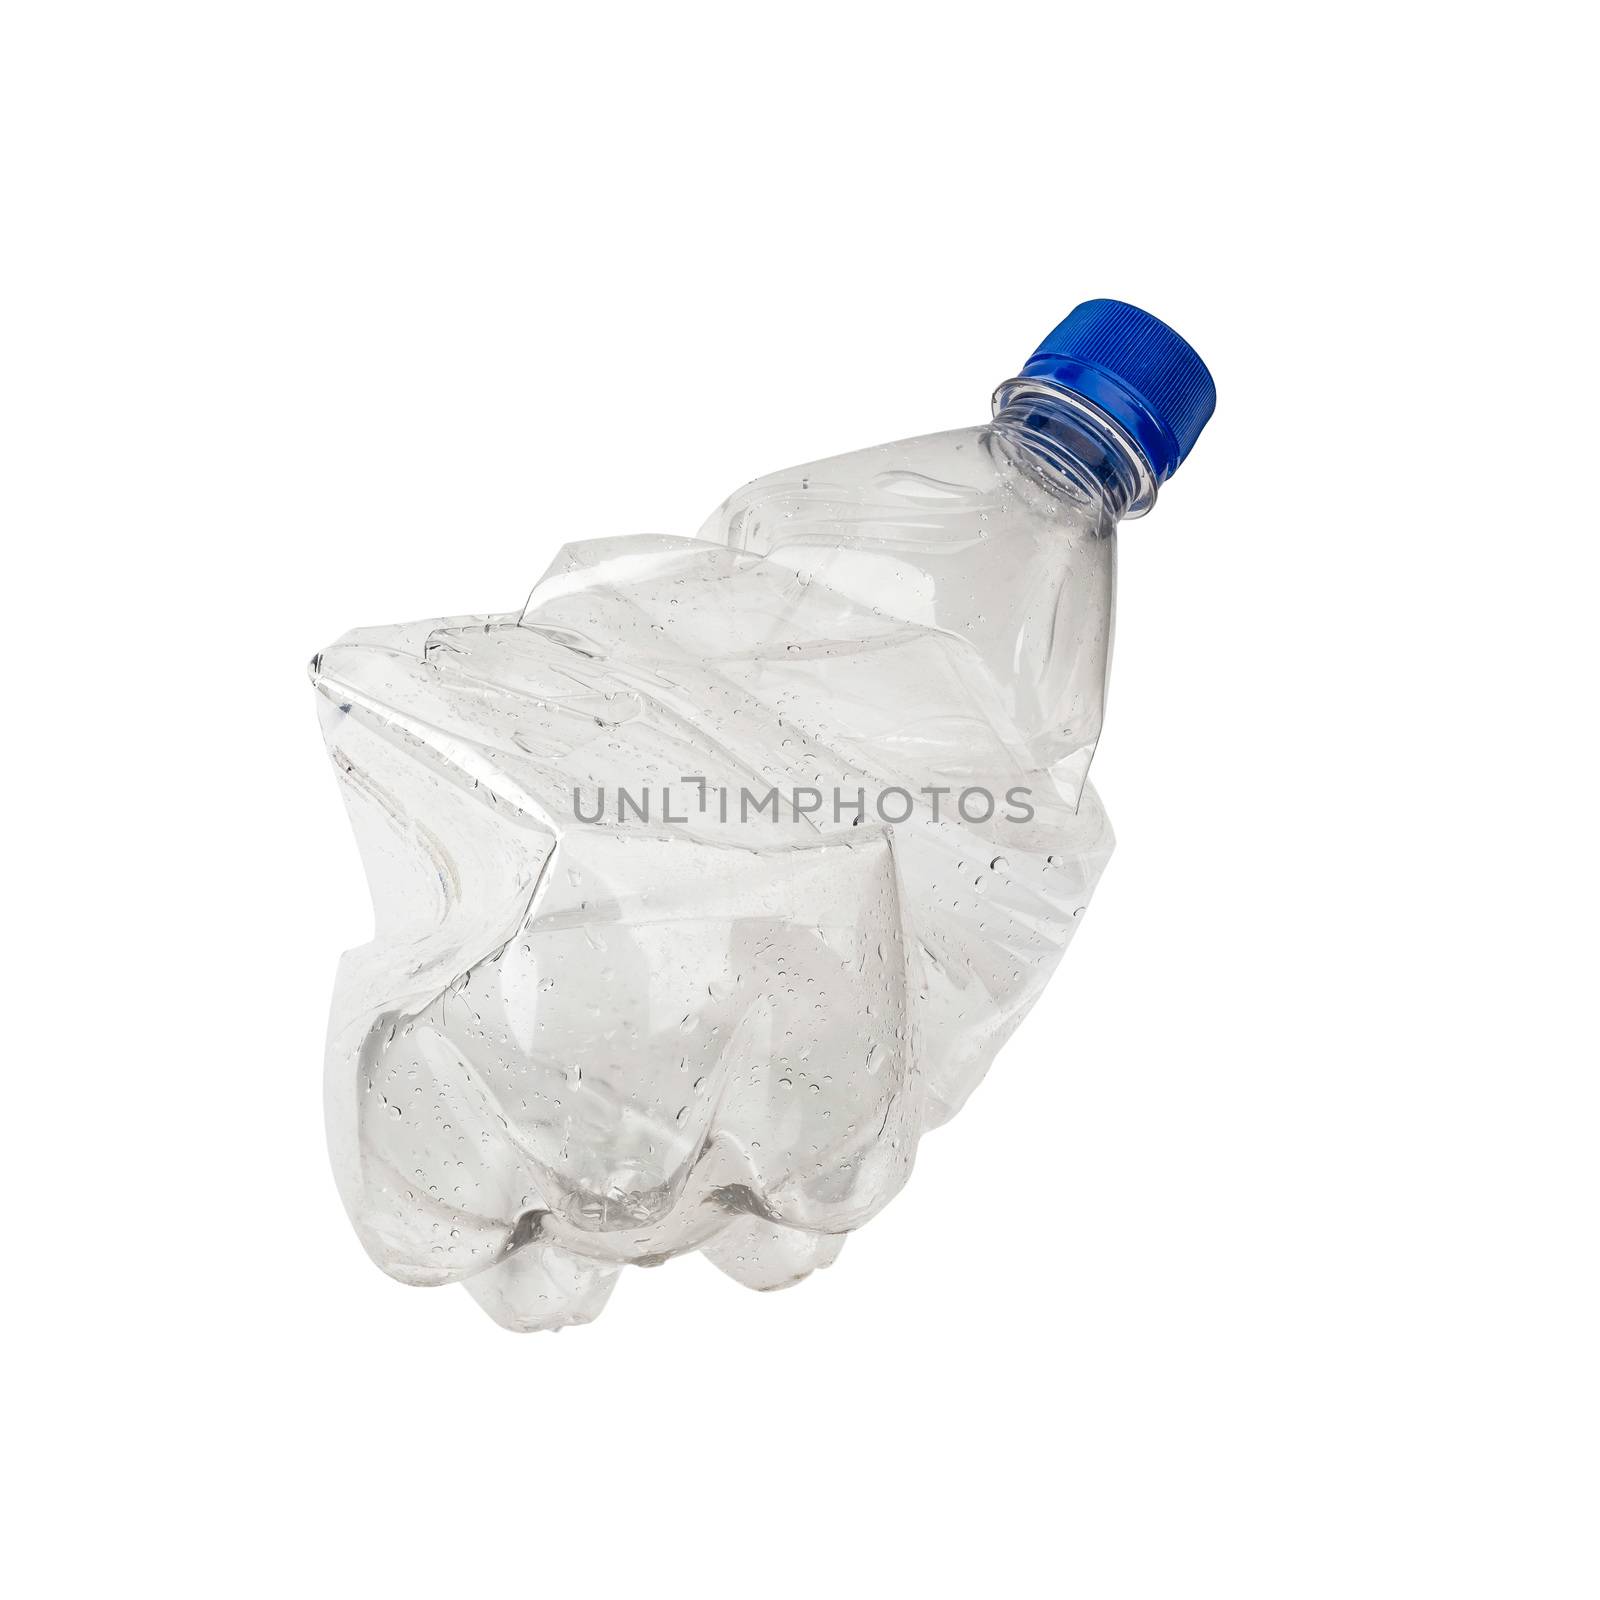 An empty smashed white plastic bottle, isolated on white background